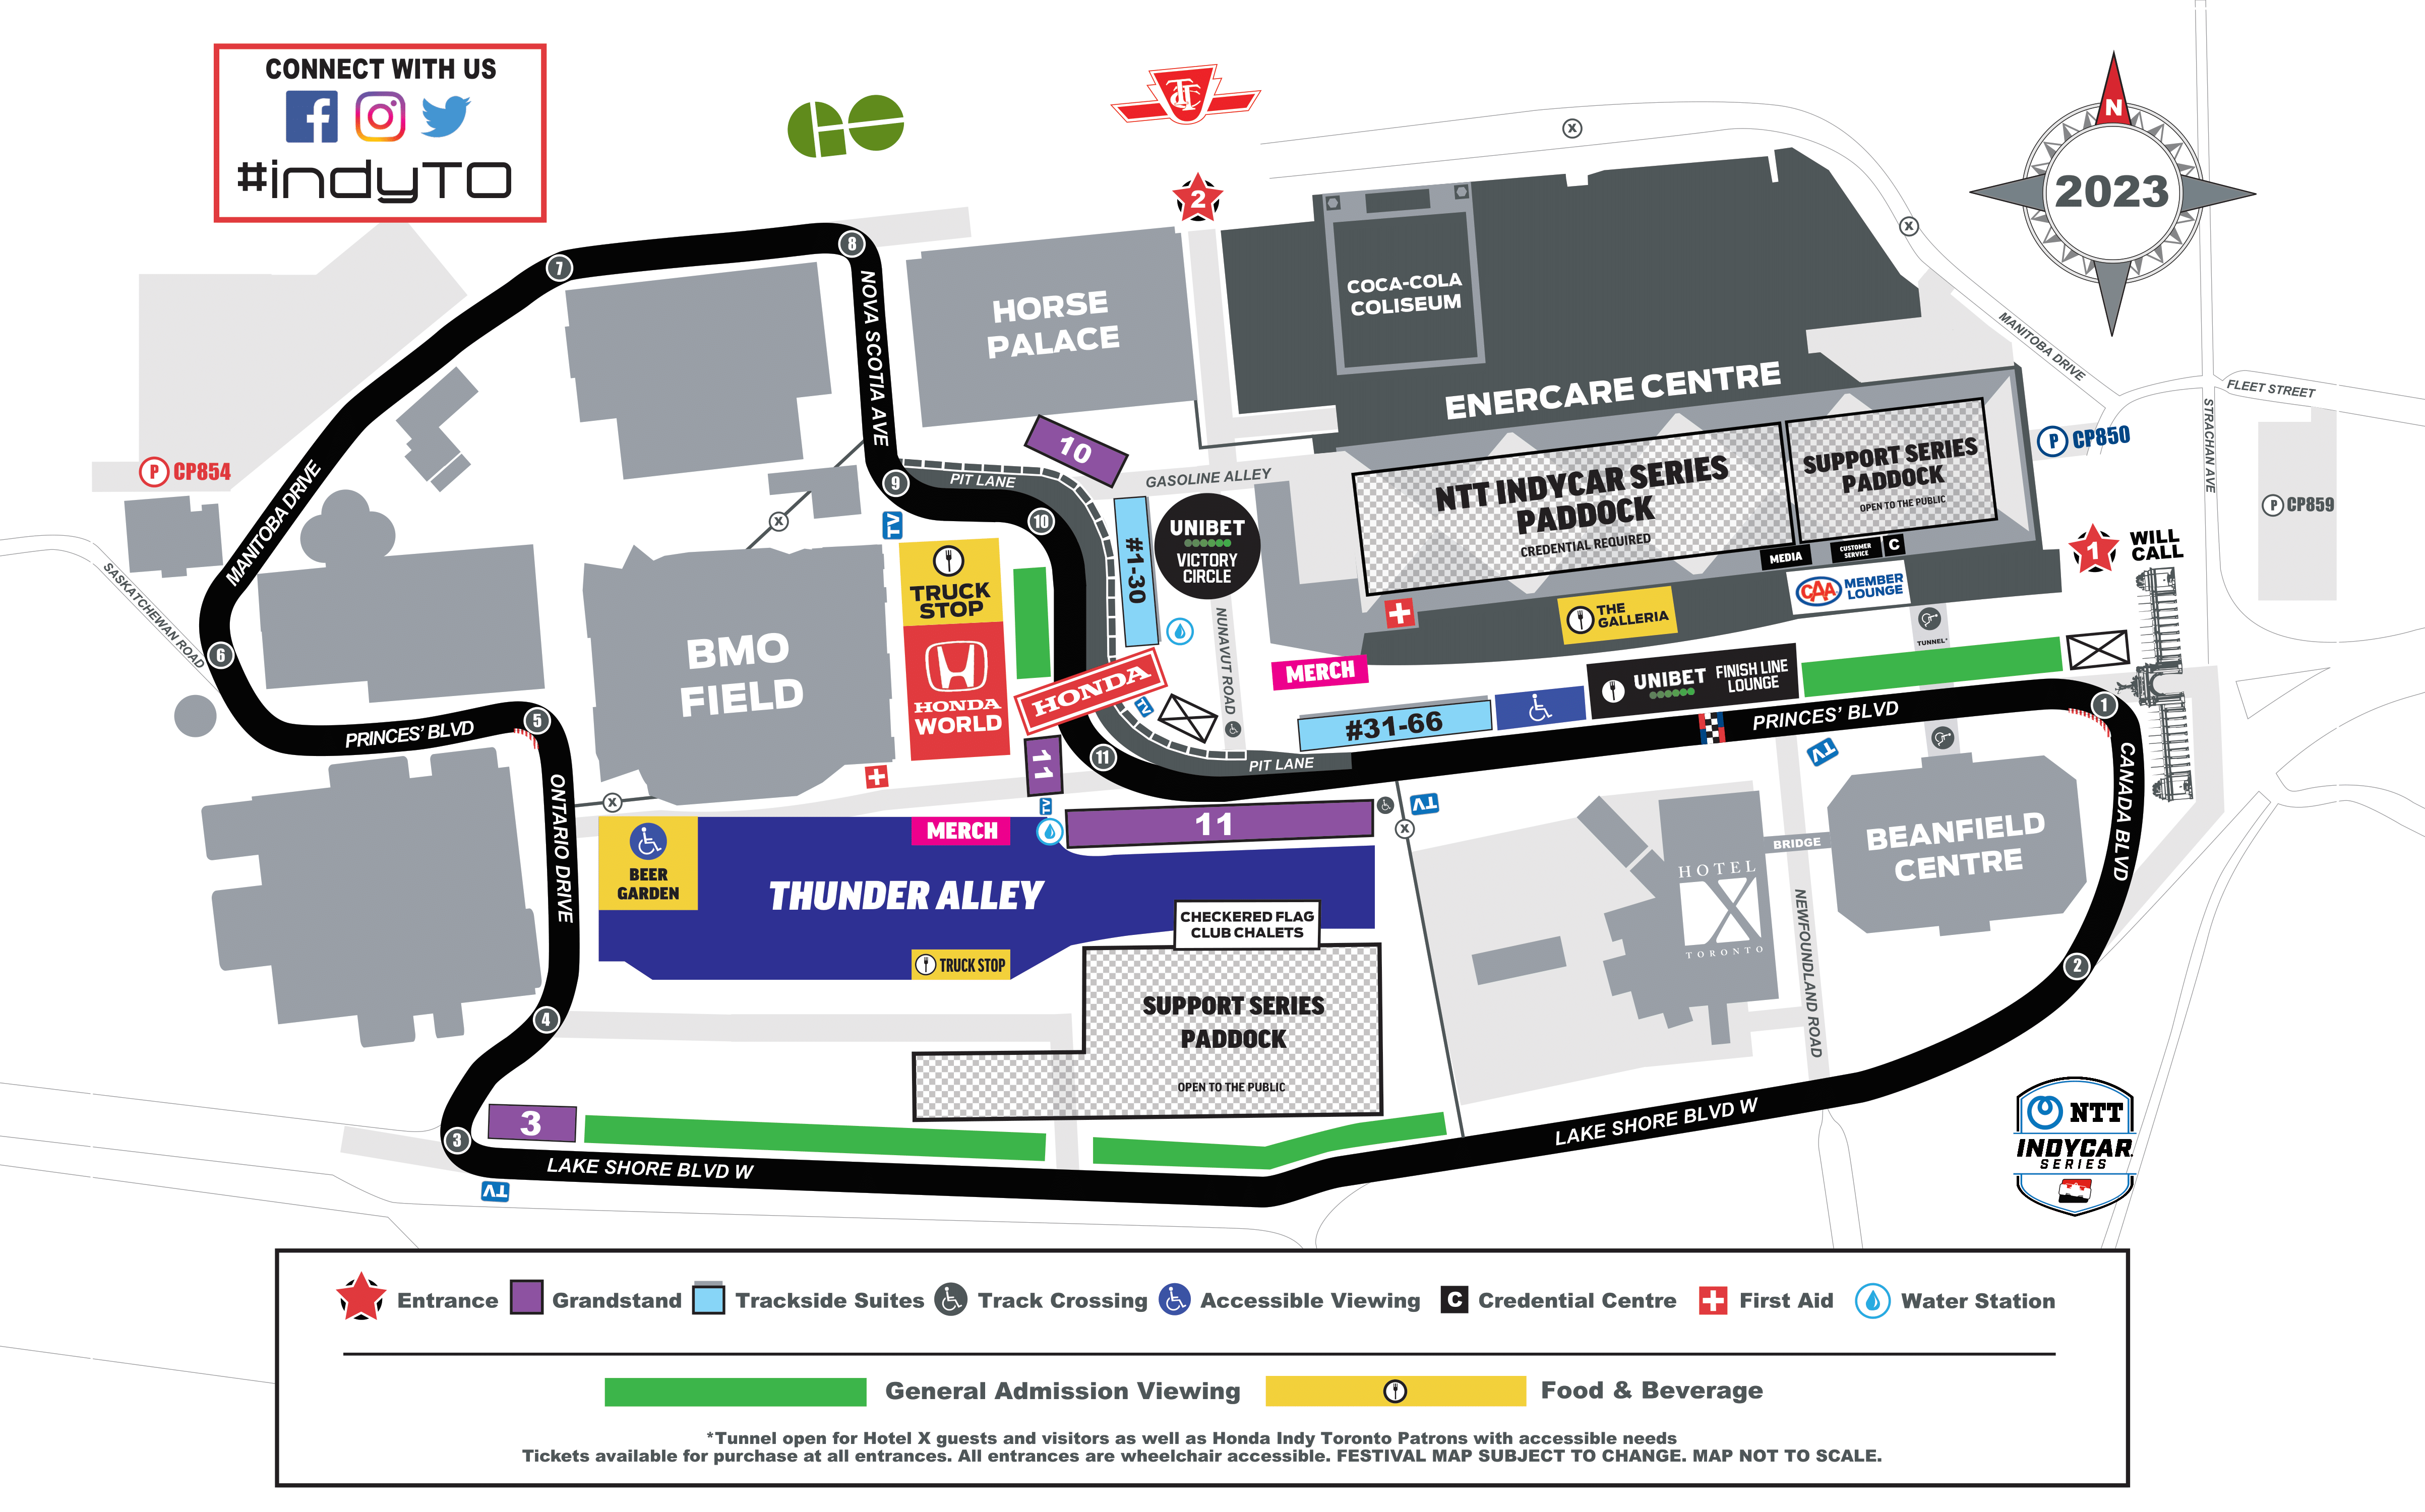 Honda Indy Toronto Festival Map